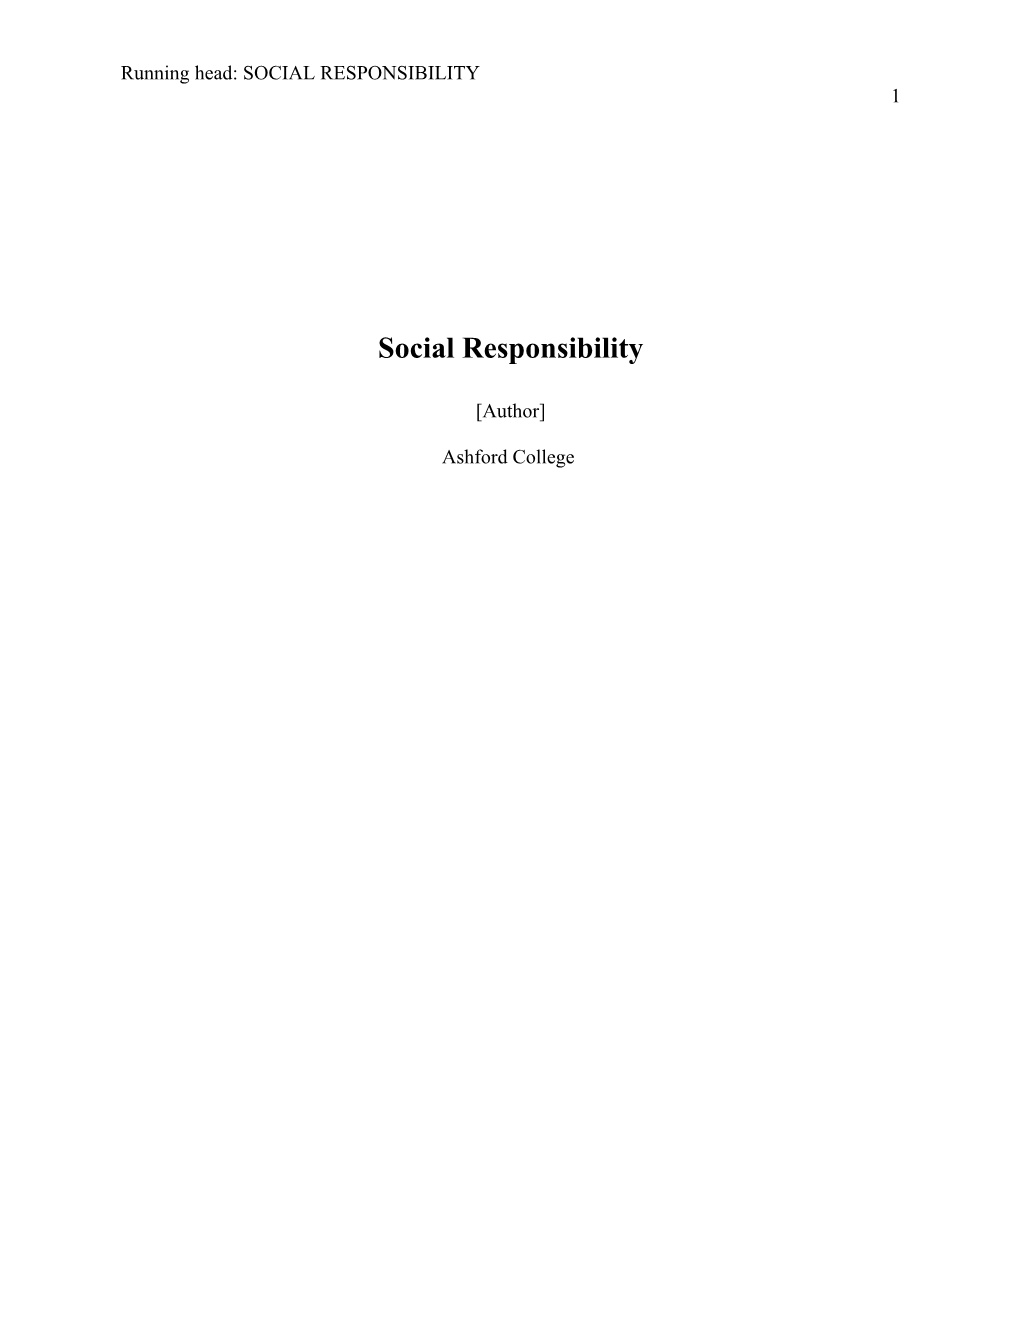 Social Responsibility s1